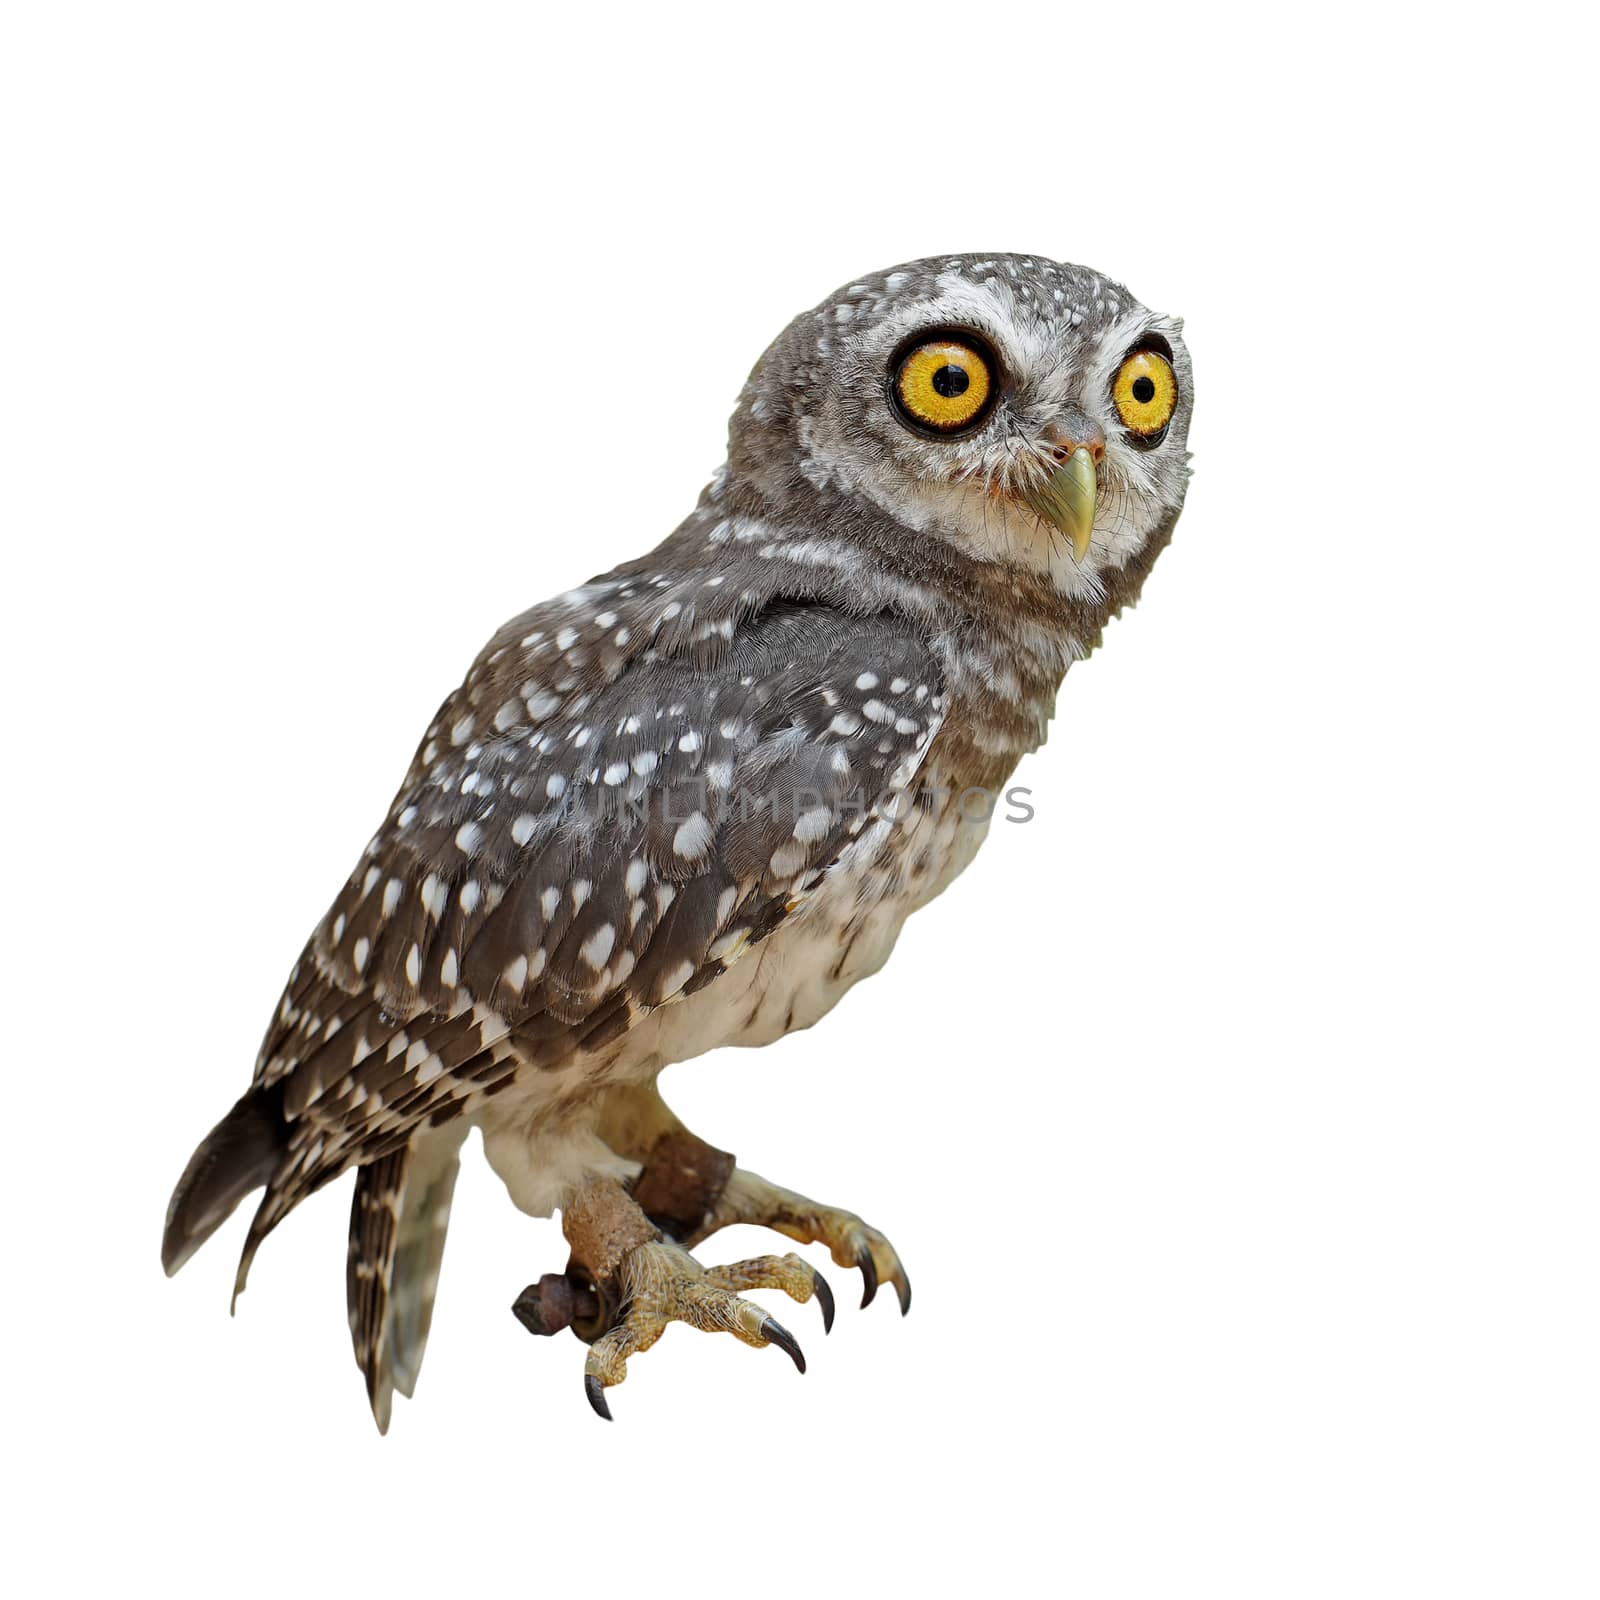 spotted owlet or athene brama bird  by leisuretime70